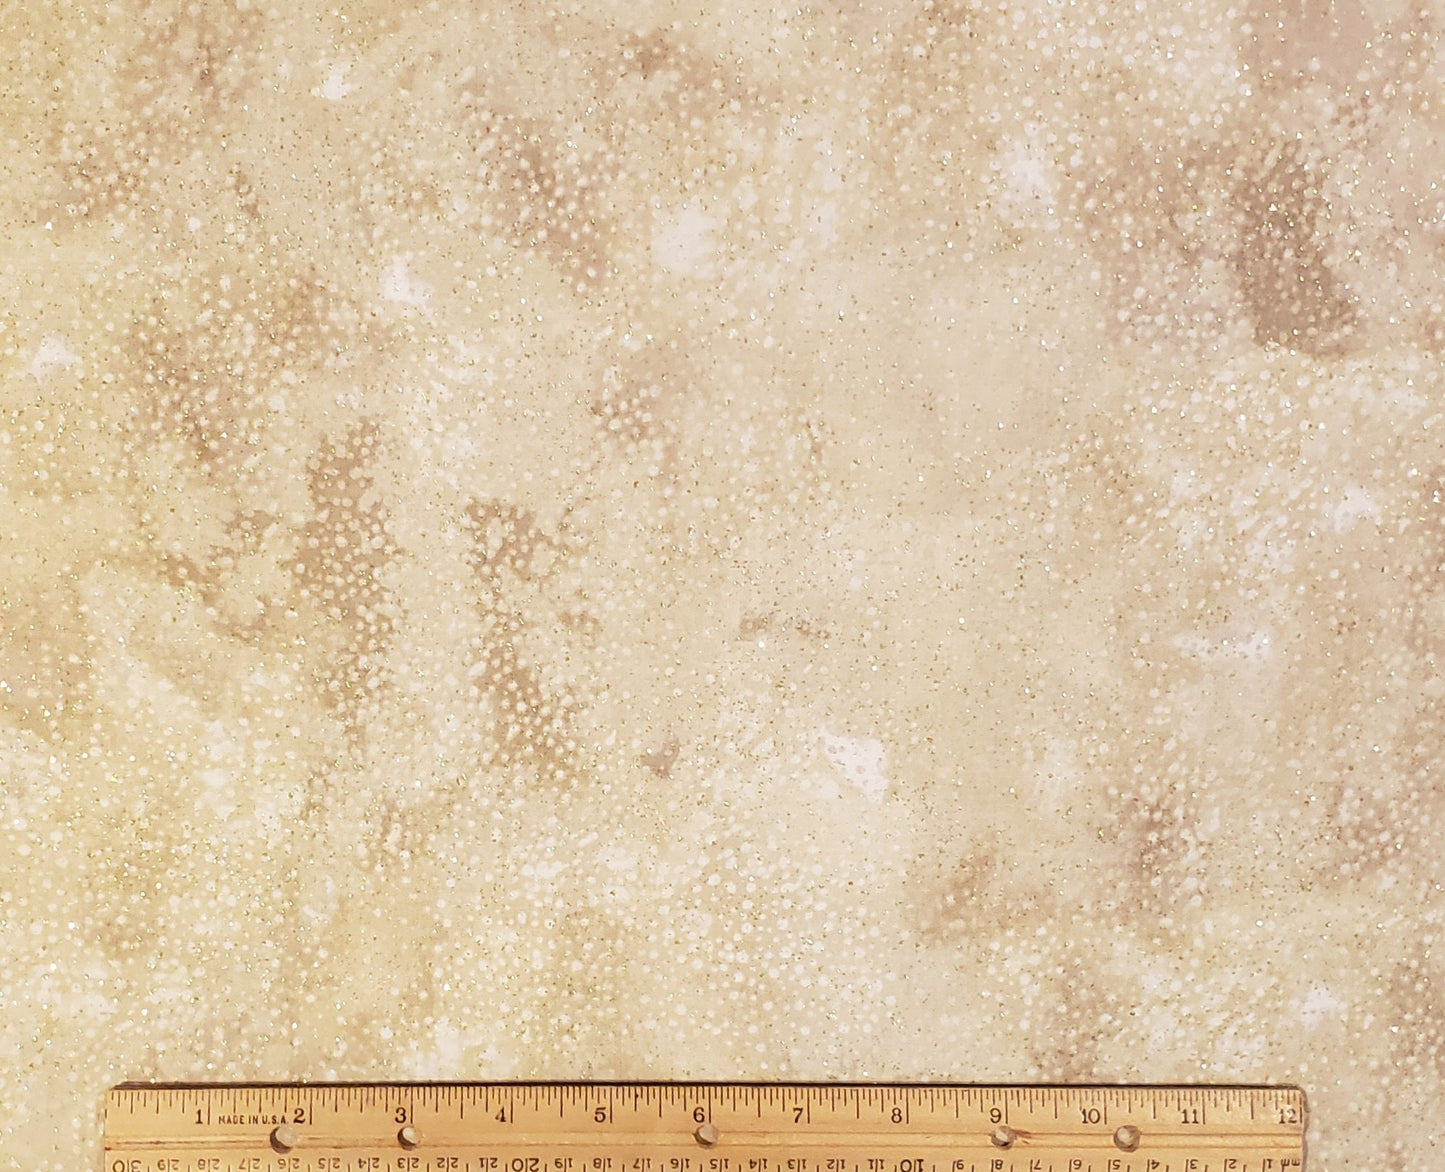 EOB - MBT, Inc. - Tan / Taupe / White Fabric - Gold Glitter